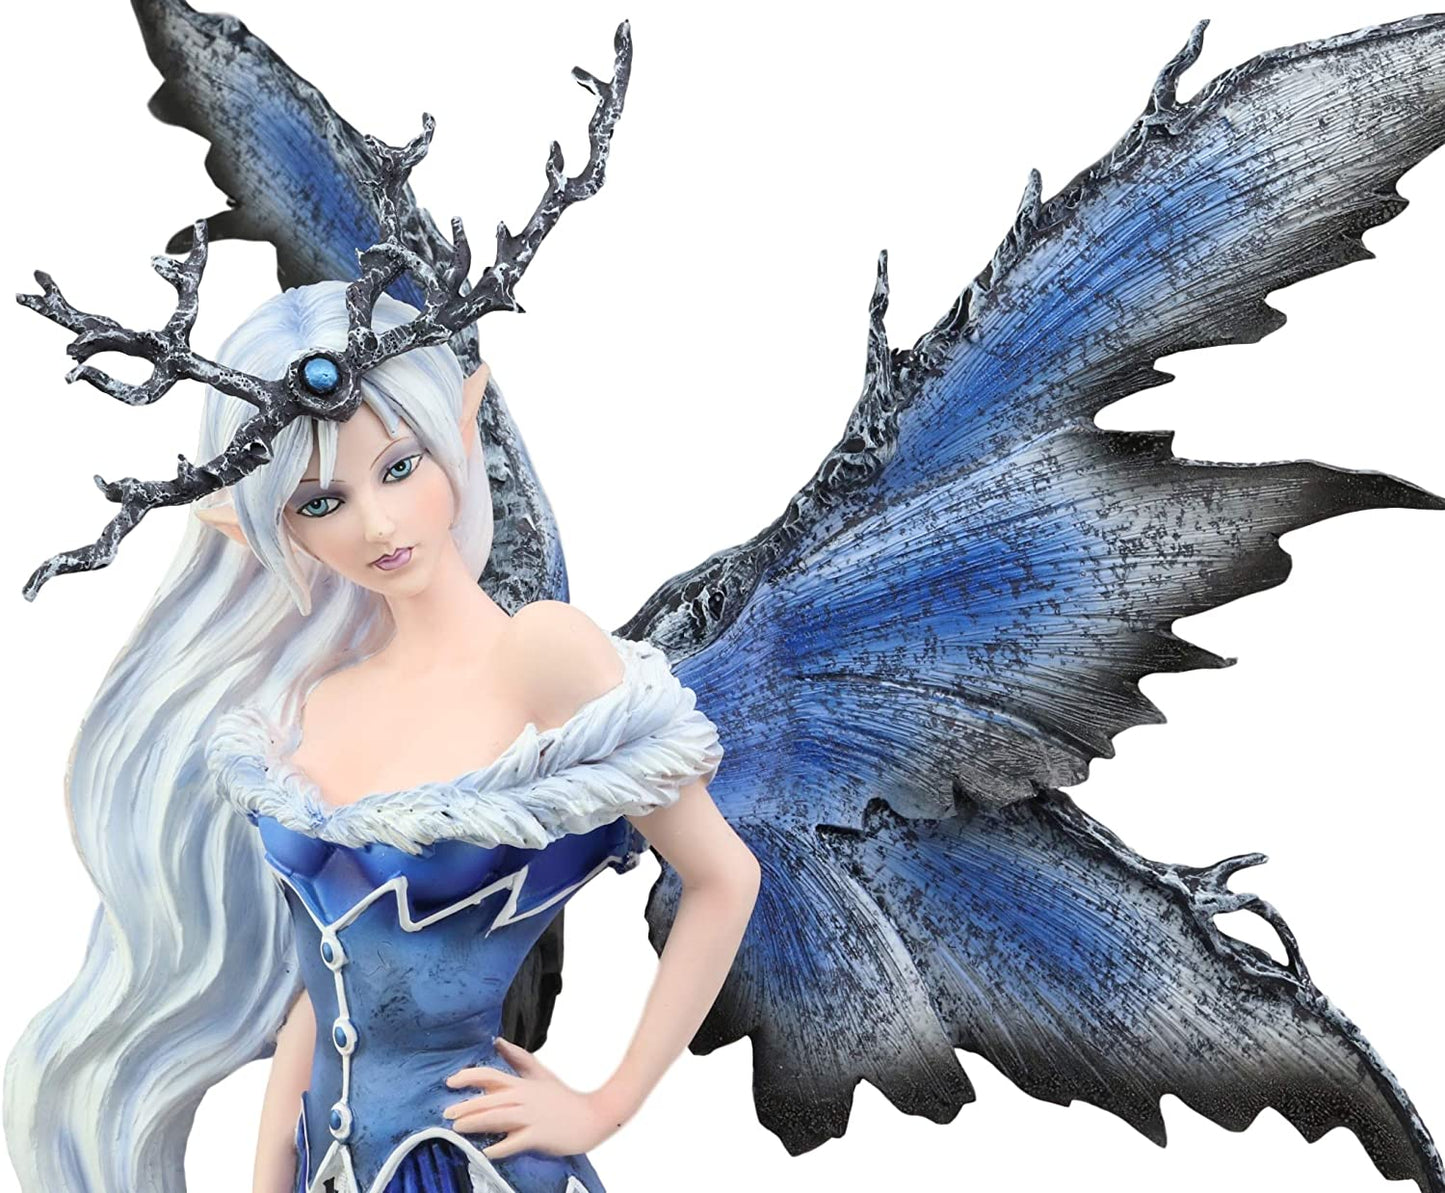 Artic Queen Fairy Figurine